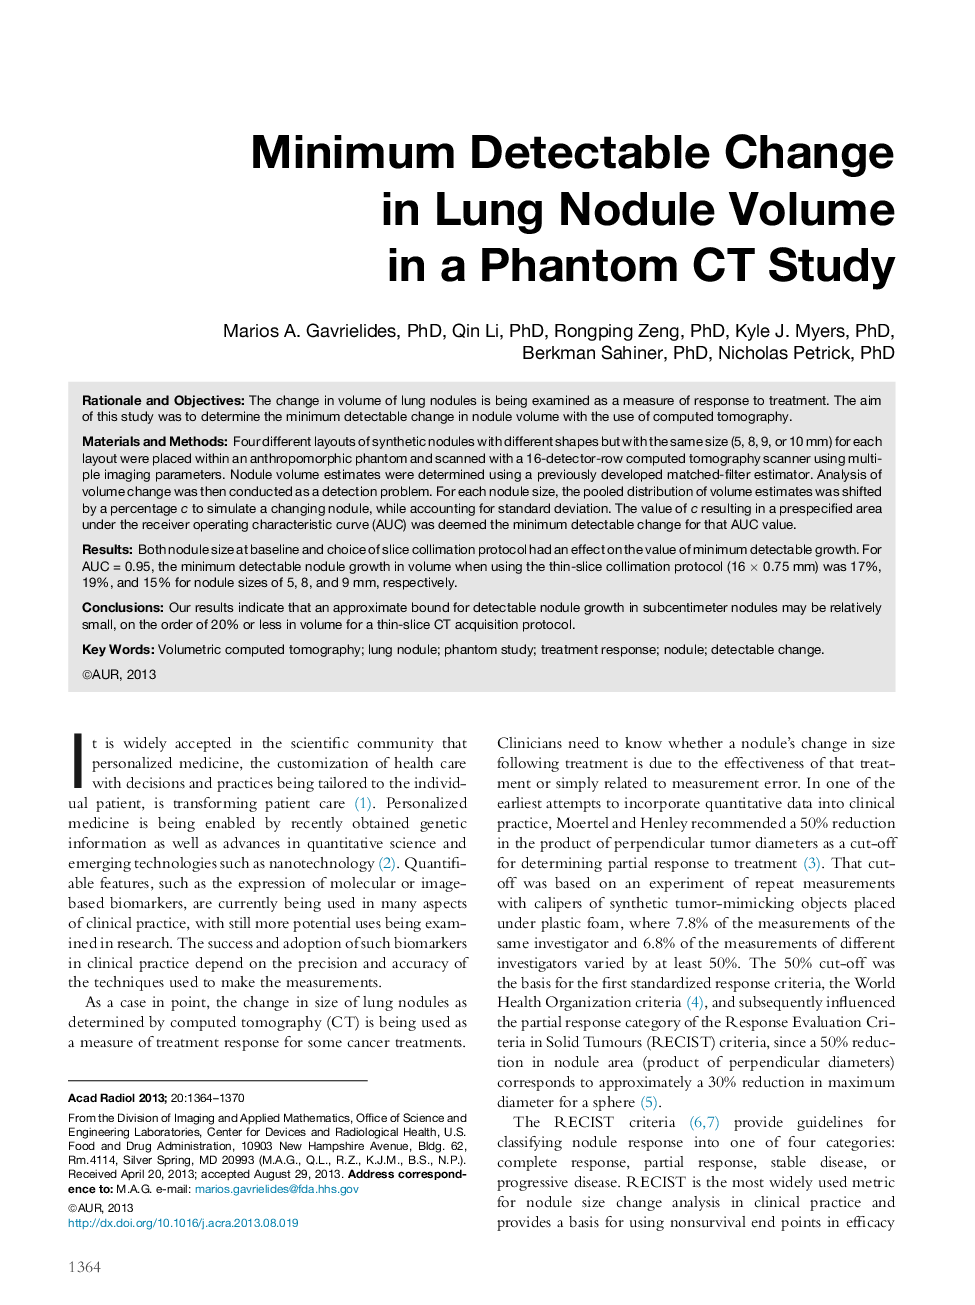 Minimum Detectable Change in Lung Nodule Volume in a Phantom CT Study